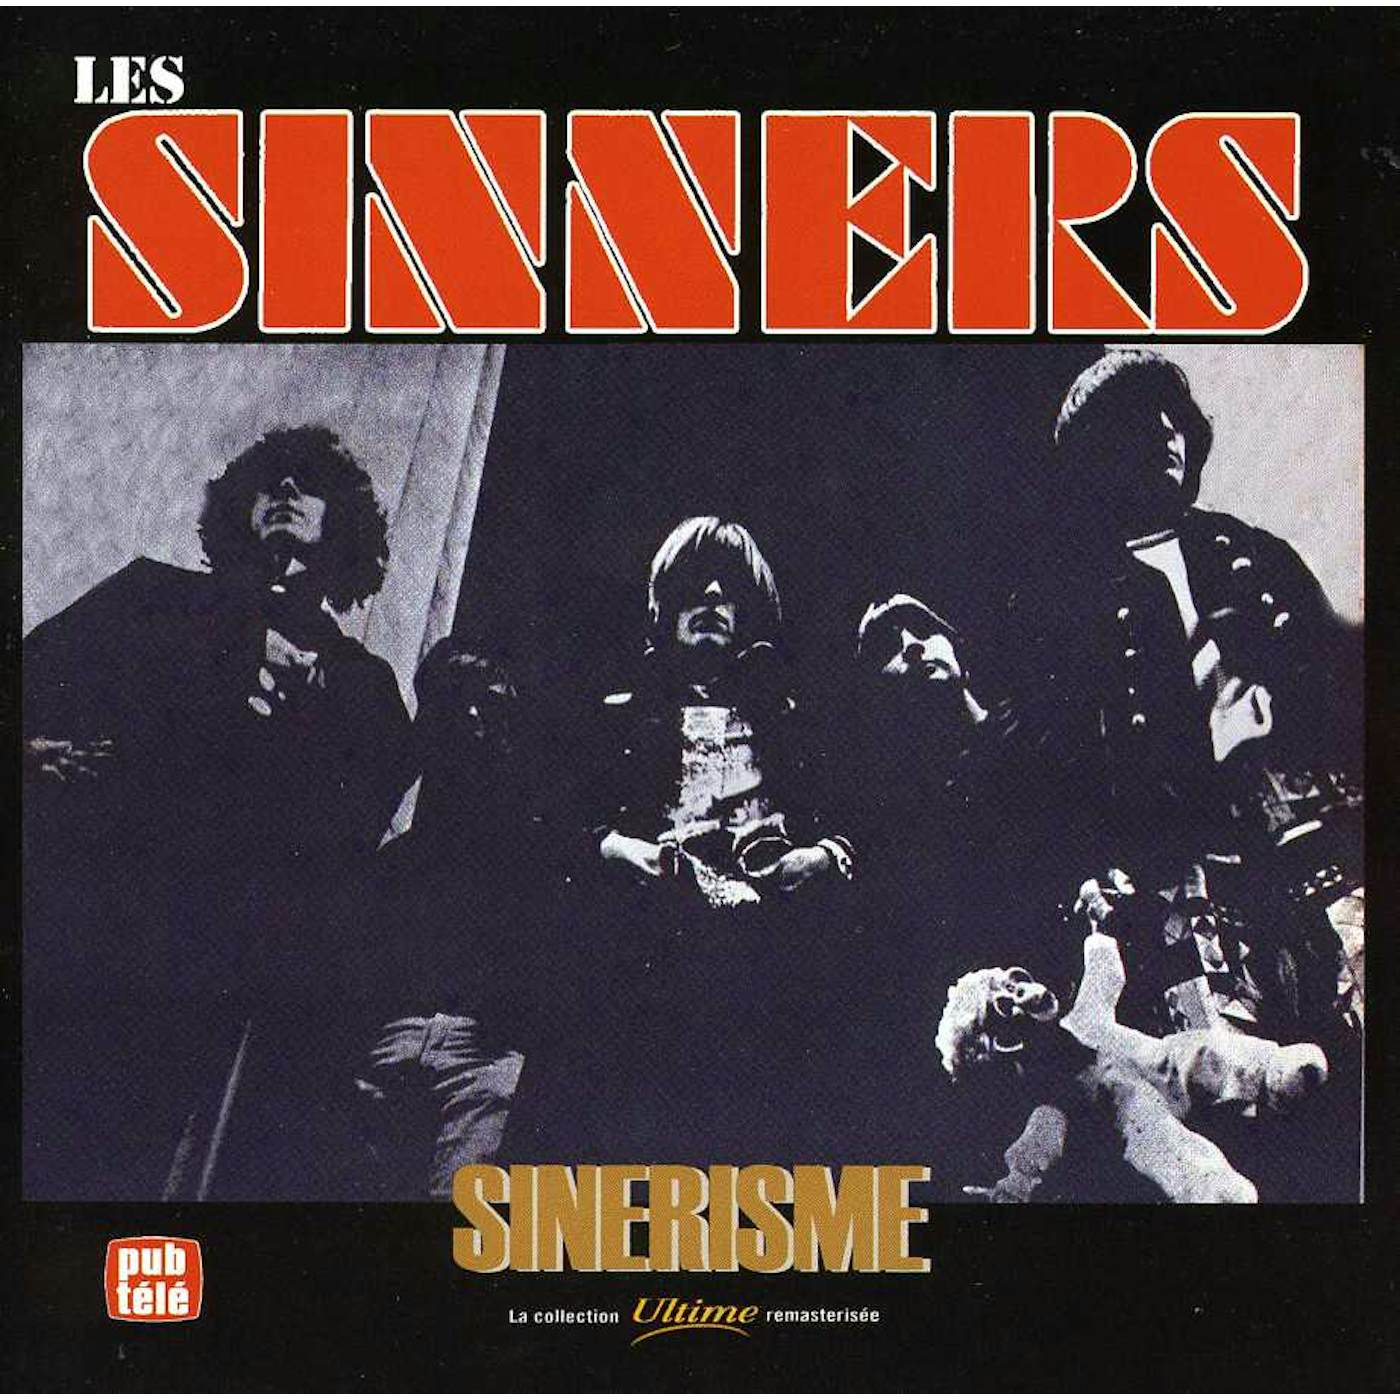 Les Sinners SINERISME CD